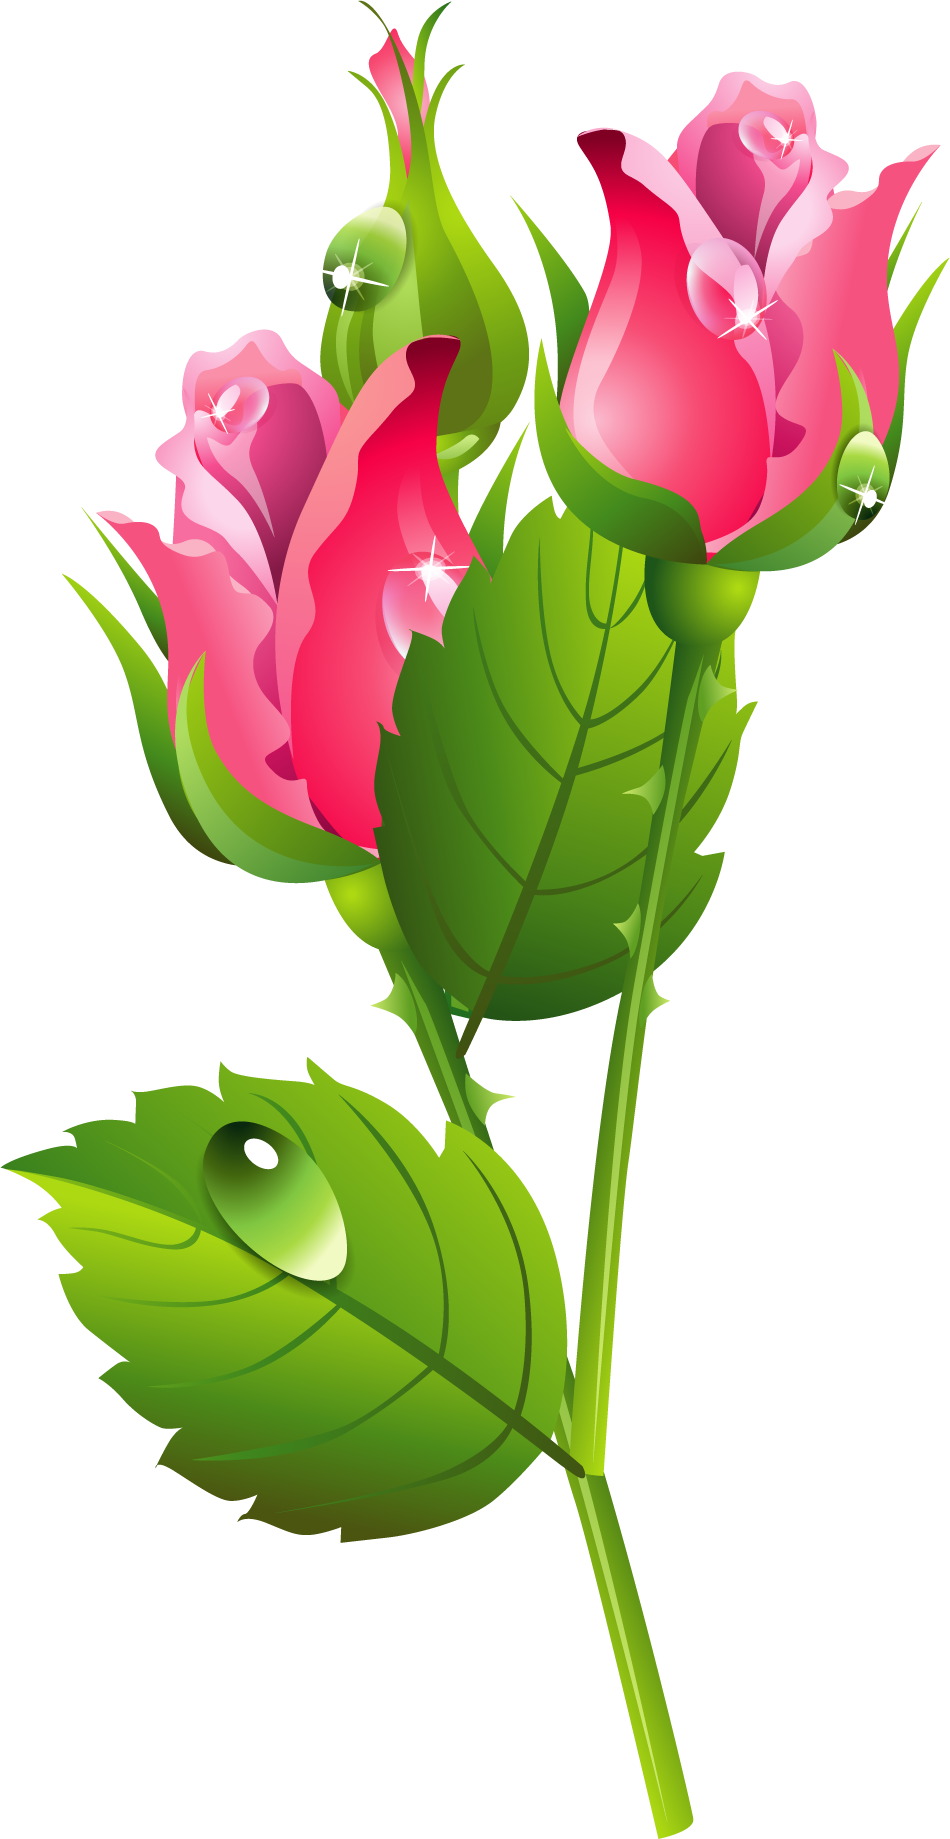 Download PNG image - Romantic Pink Flower Border PNG Transparent Image 